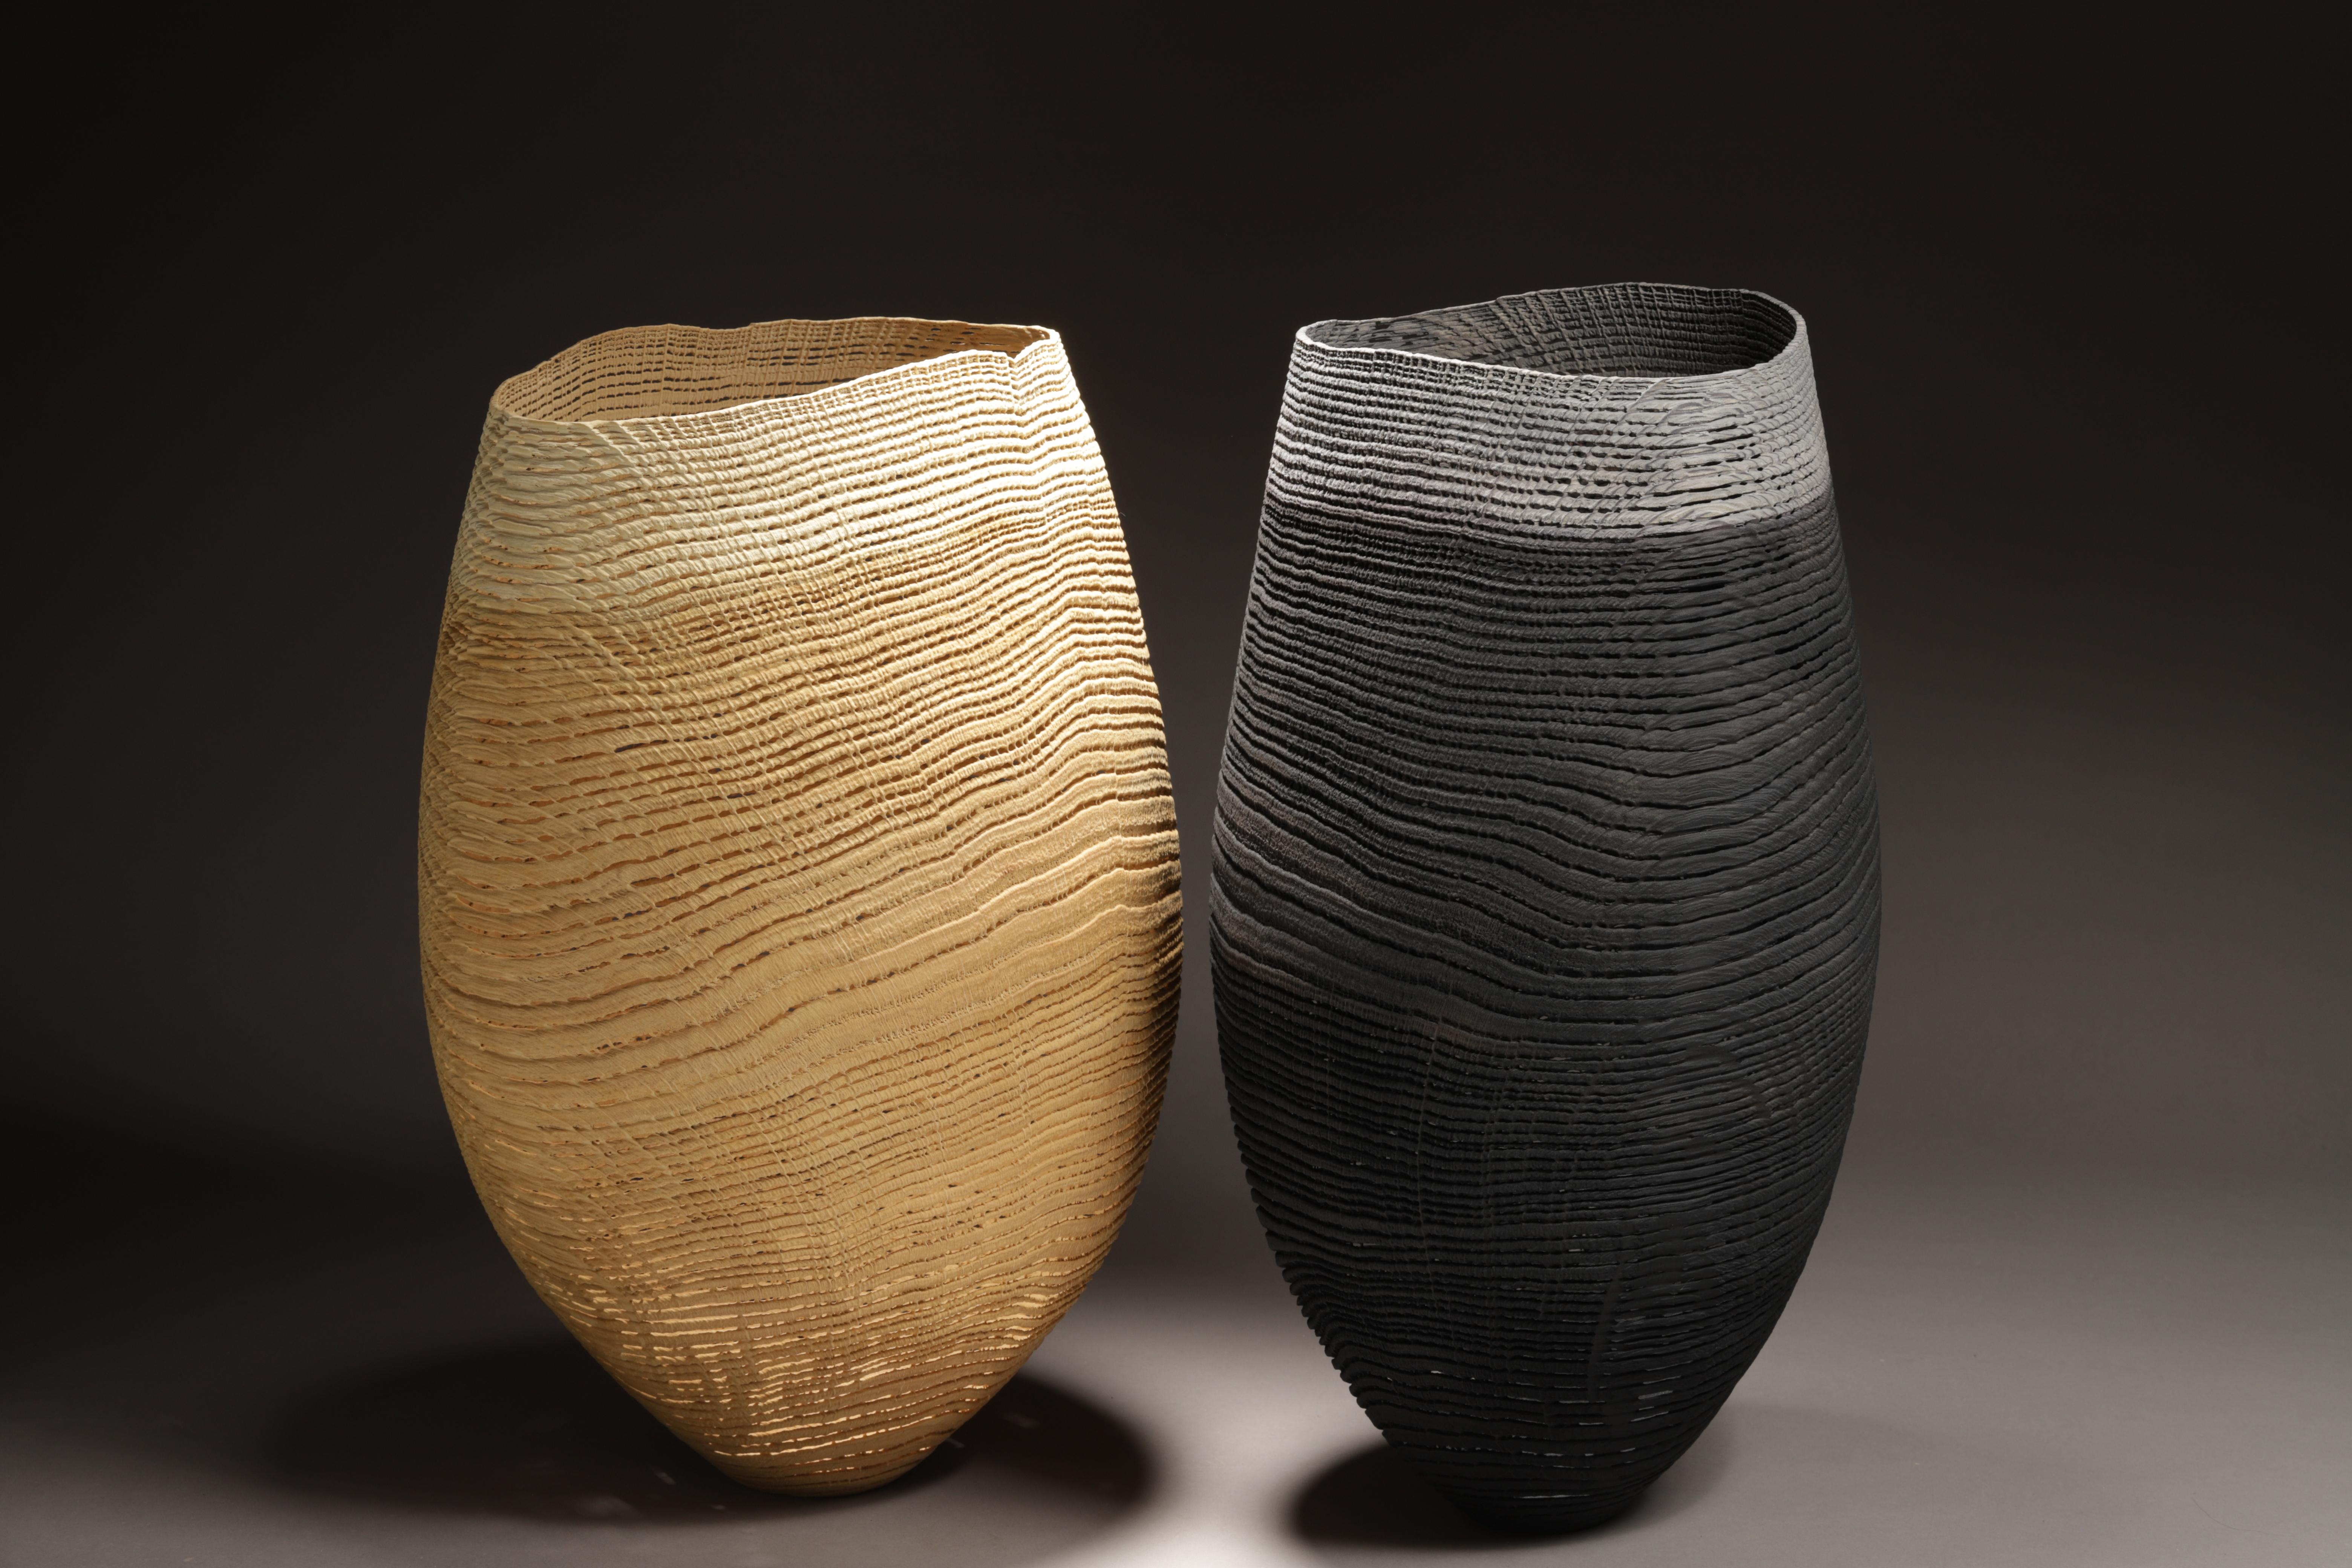 Black Grey Vase Sculpture 1026 - Lathe-Turned & Sandblasted wood Oak - Contemporary Art by pascal oudet